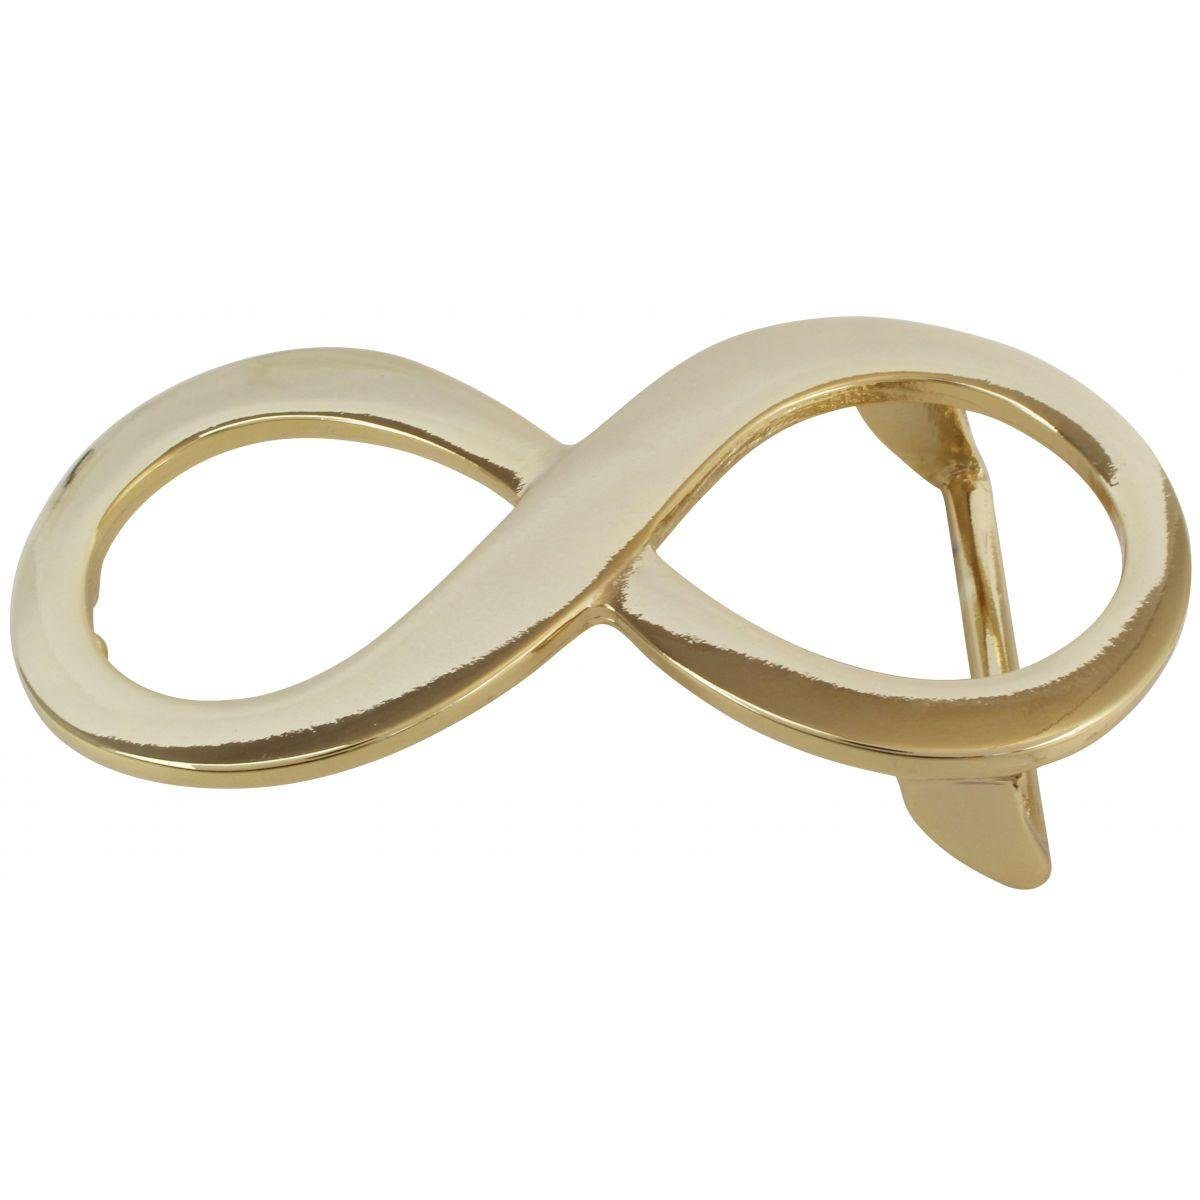 neueste BELTINGER Gürtelschnalle Infinity 4,0 cm Gold - 40mm Gürtelschließe Glänzend Gürtel - Buckle Wechselschließe